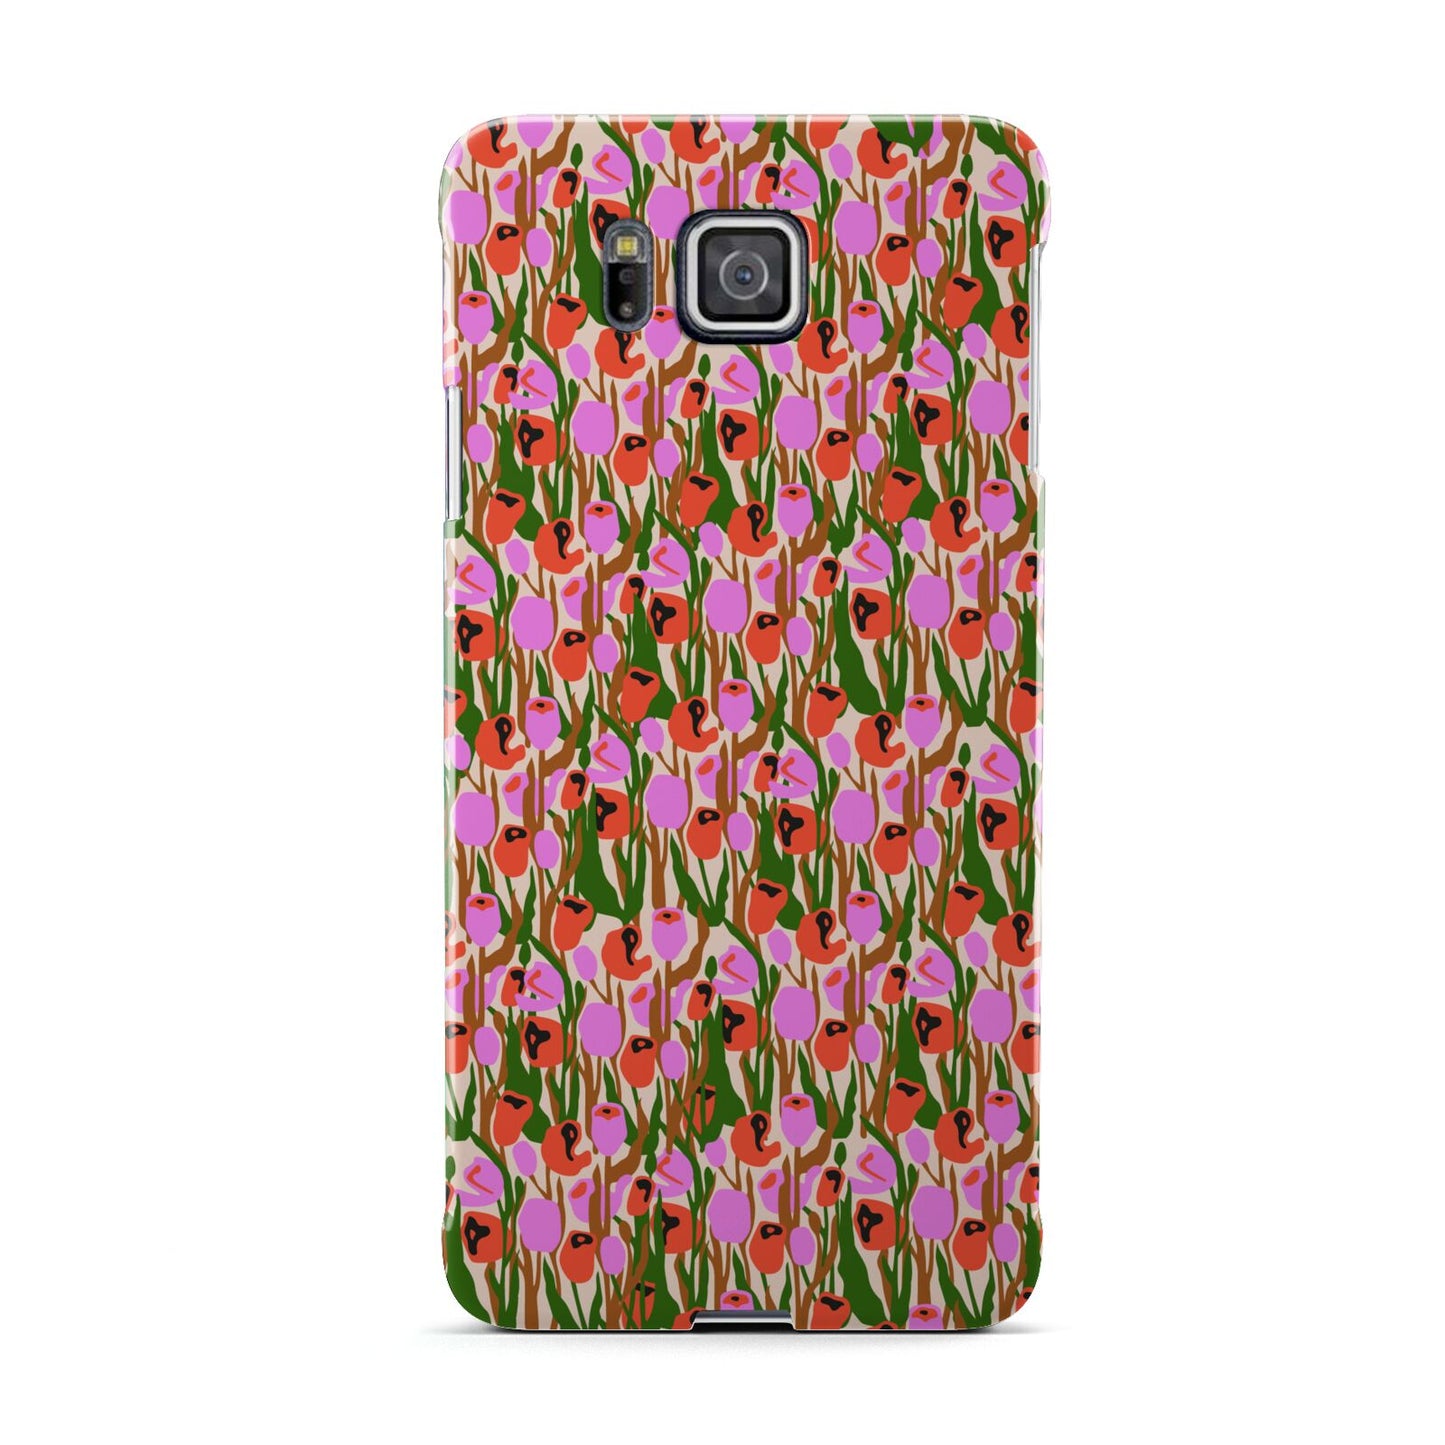 Floral Samsung Galaxy Alpha Case